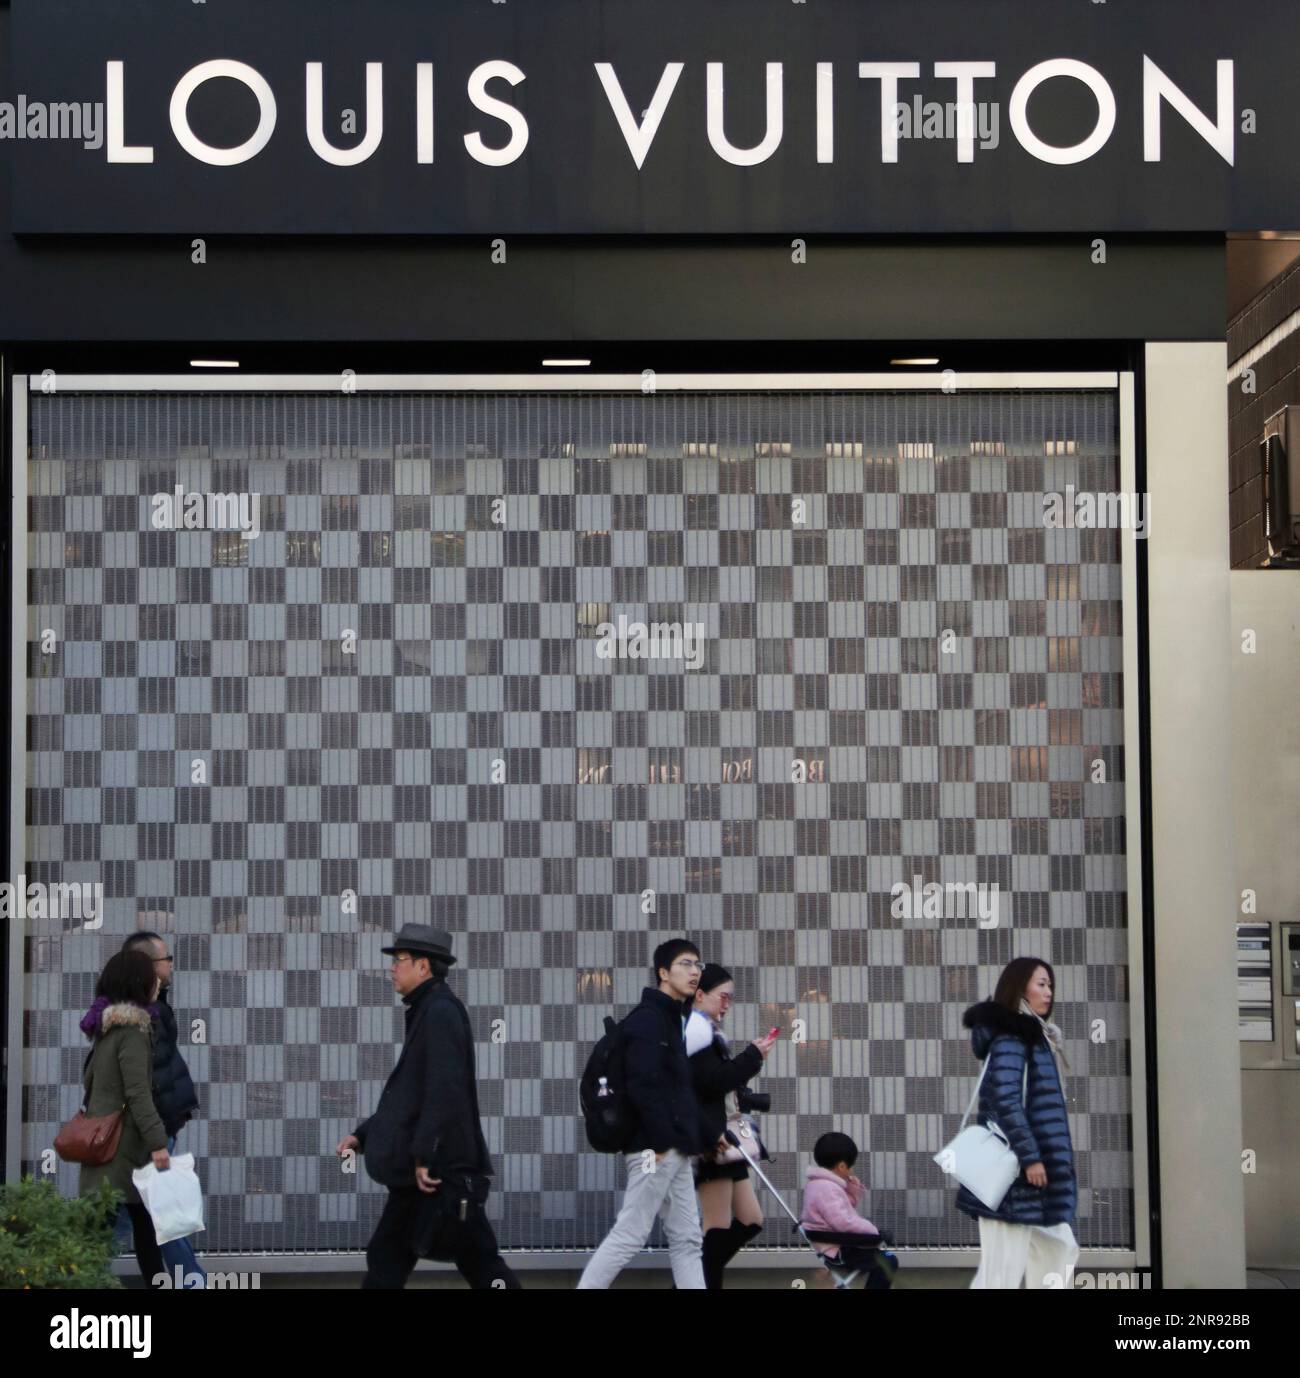 Louis Vuitton Malletier Trademarks & Logos